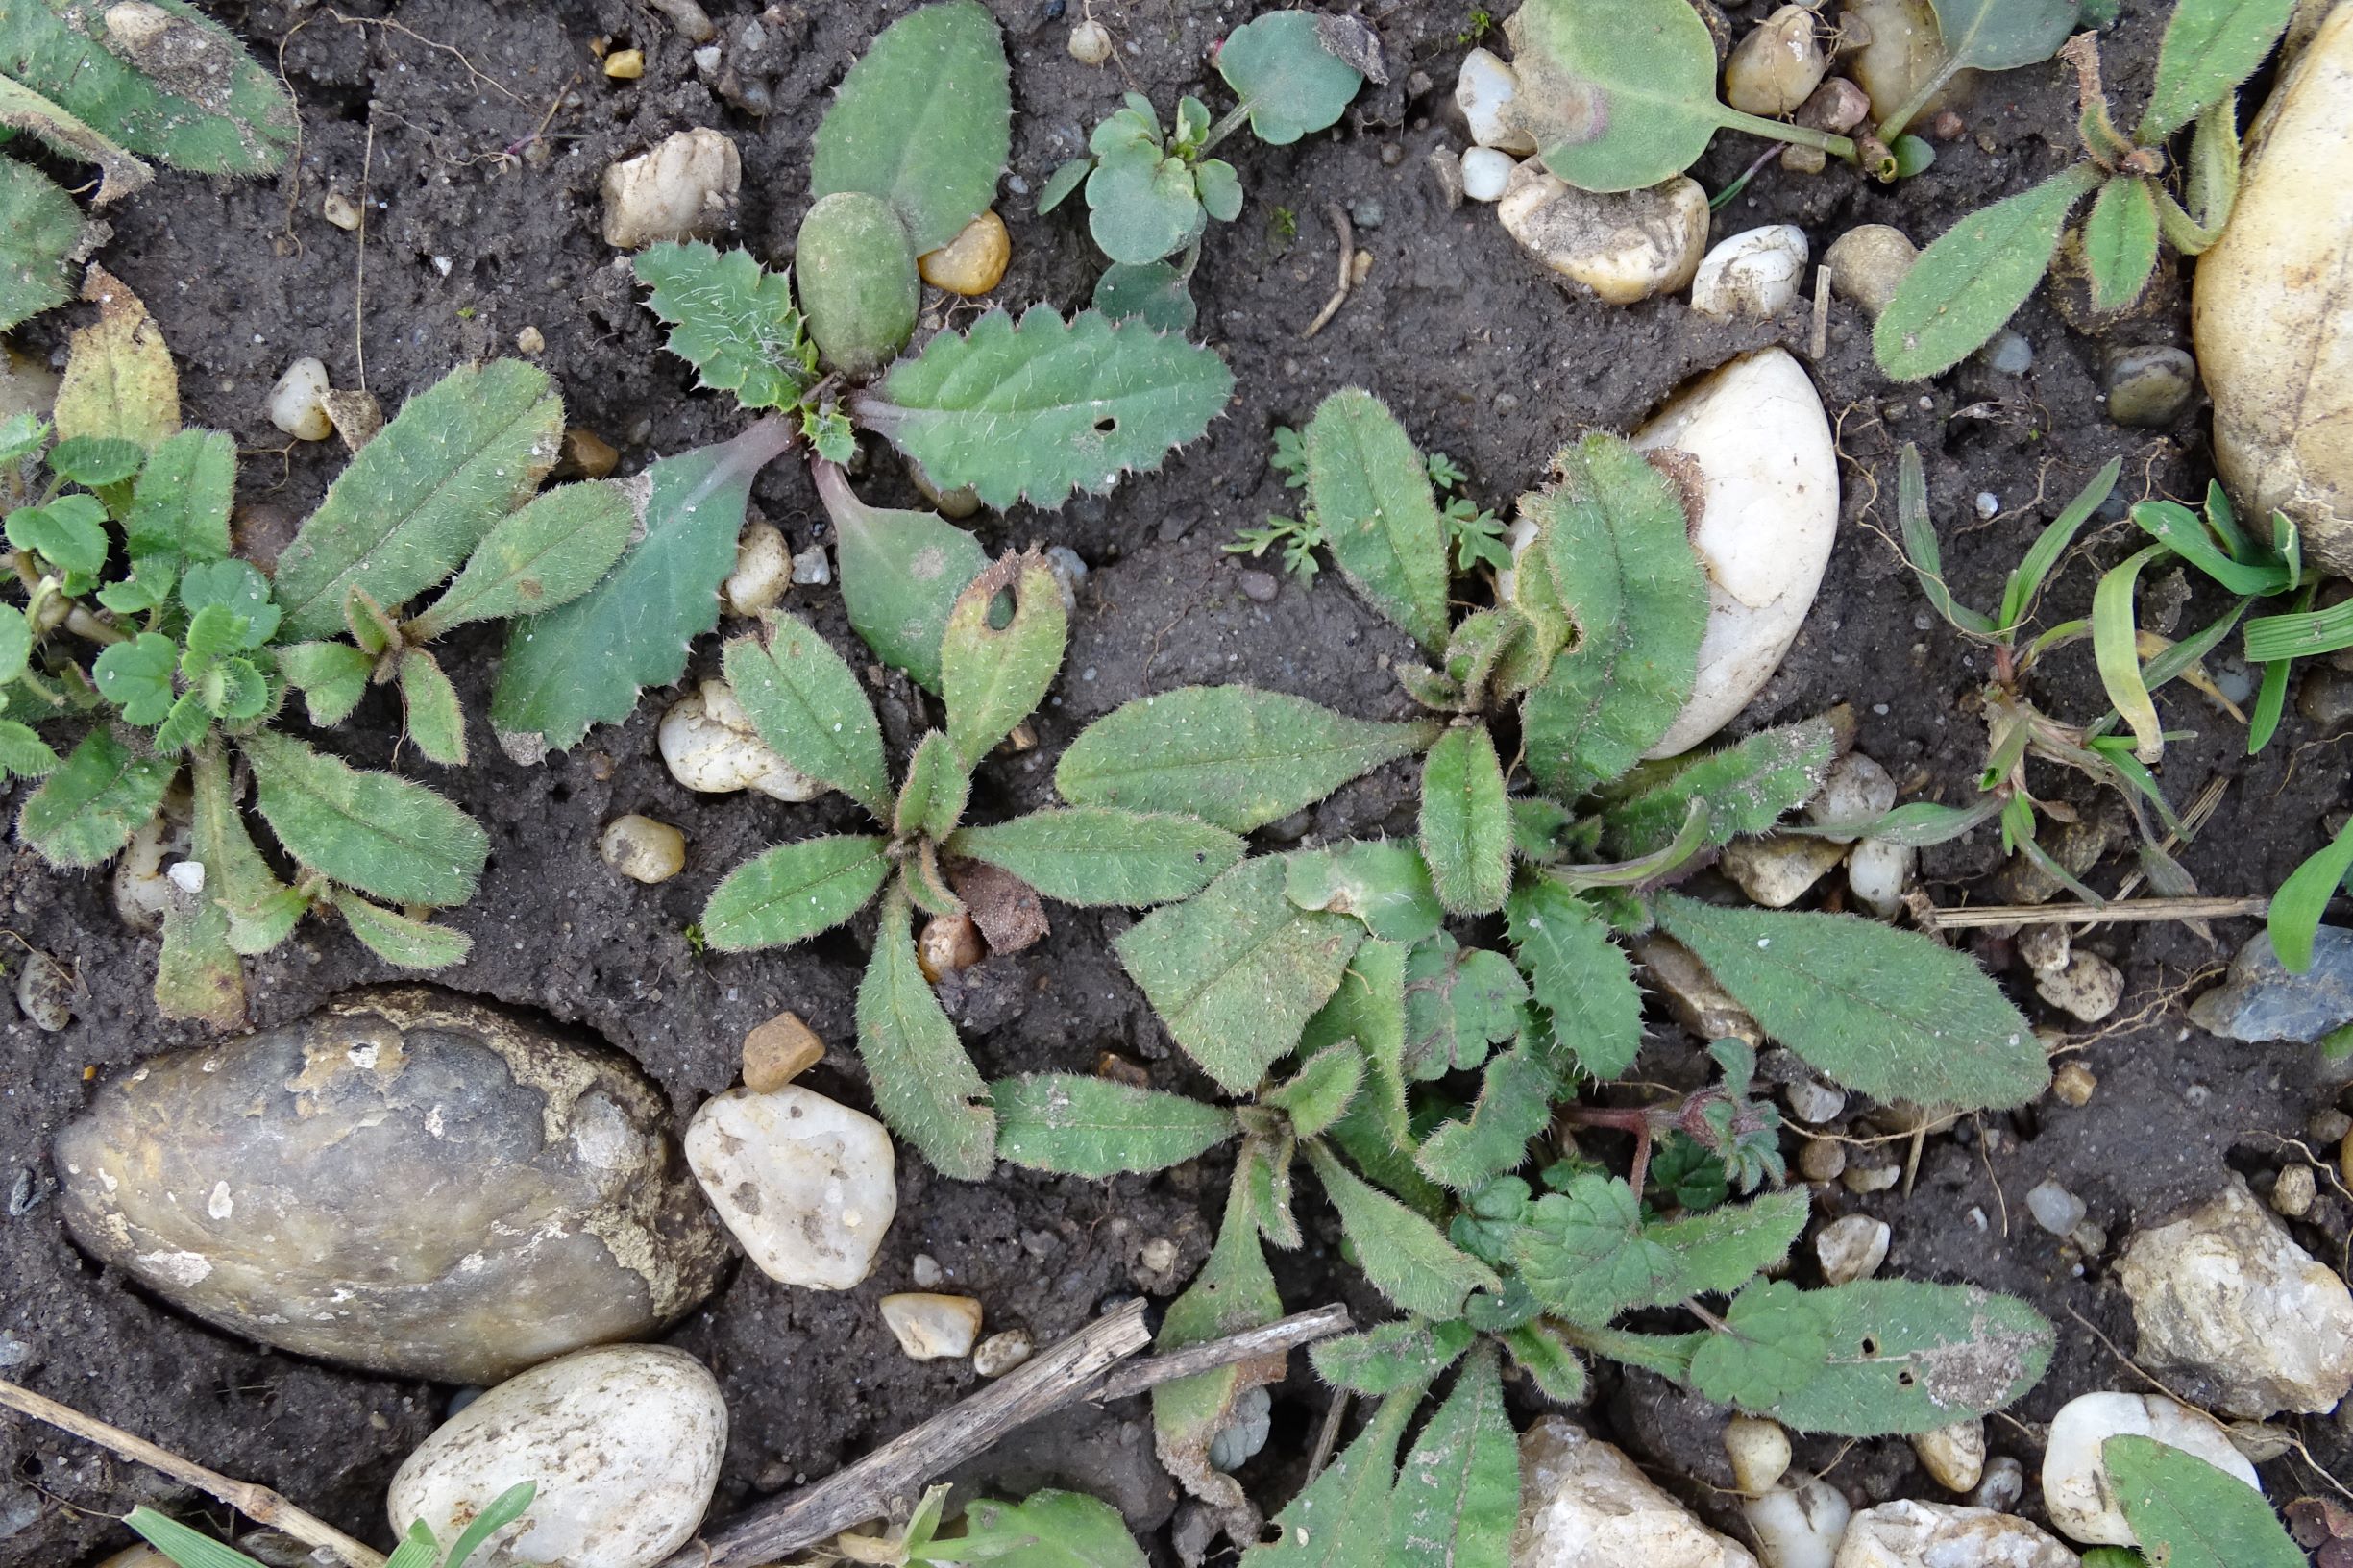 DSC08164 rosetten, 2021-01-25, potzneusiedl-gattendorf, echium vulgare, carduus acanthoides, viola a. arvensis, veronica cf. triloba.JPG